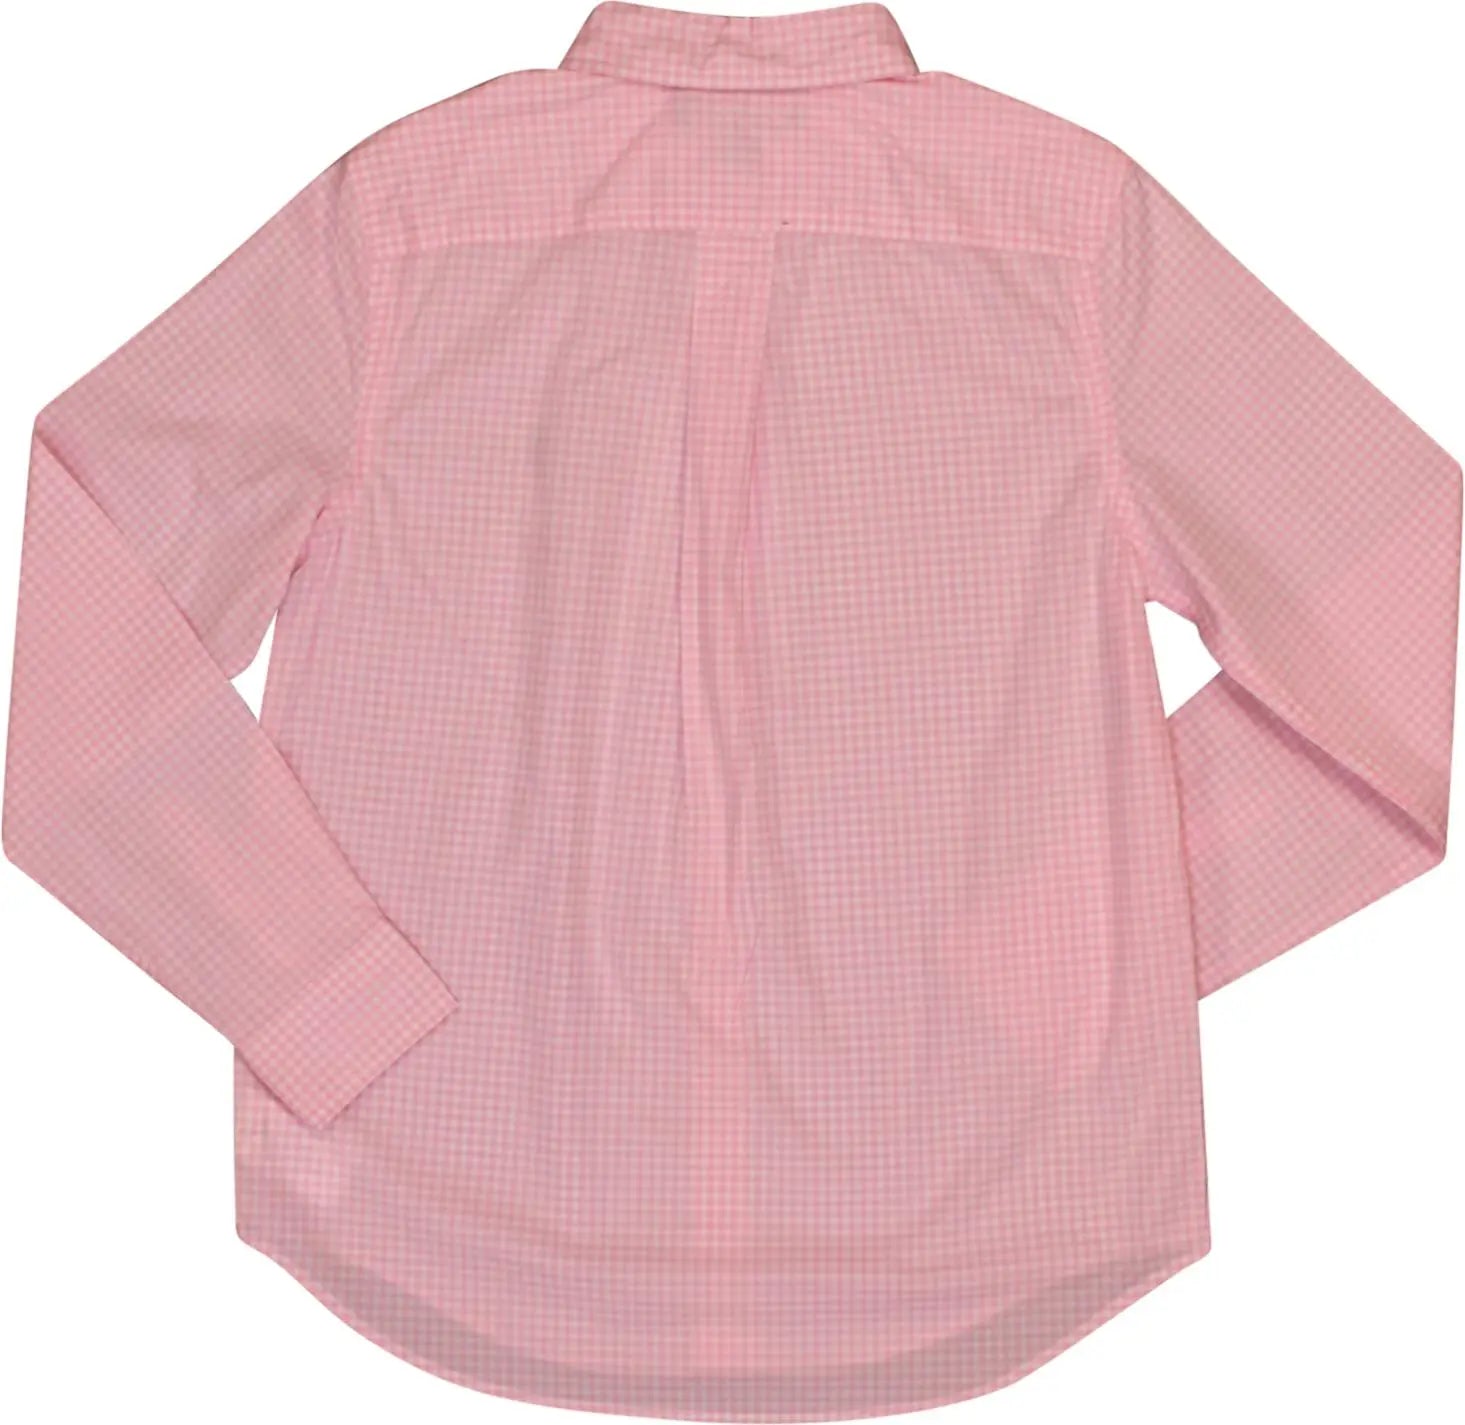 Ralph Lauren - Pink Shirt by Ralph Lauren- ThriftTale.com - Vintage and second handclothing